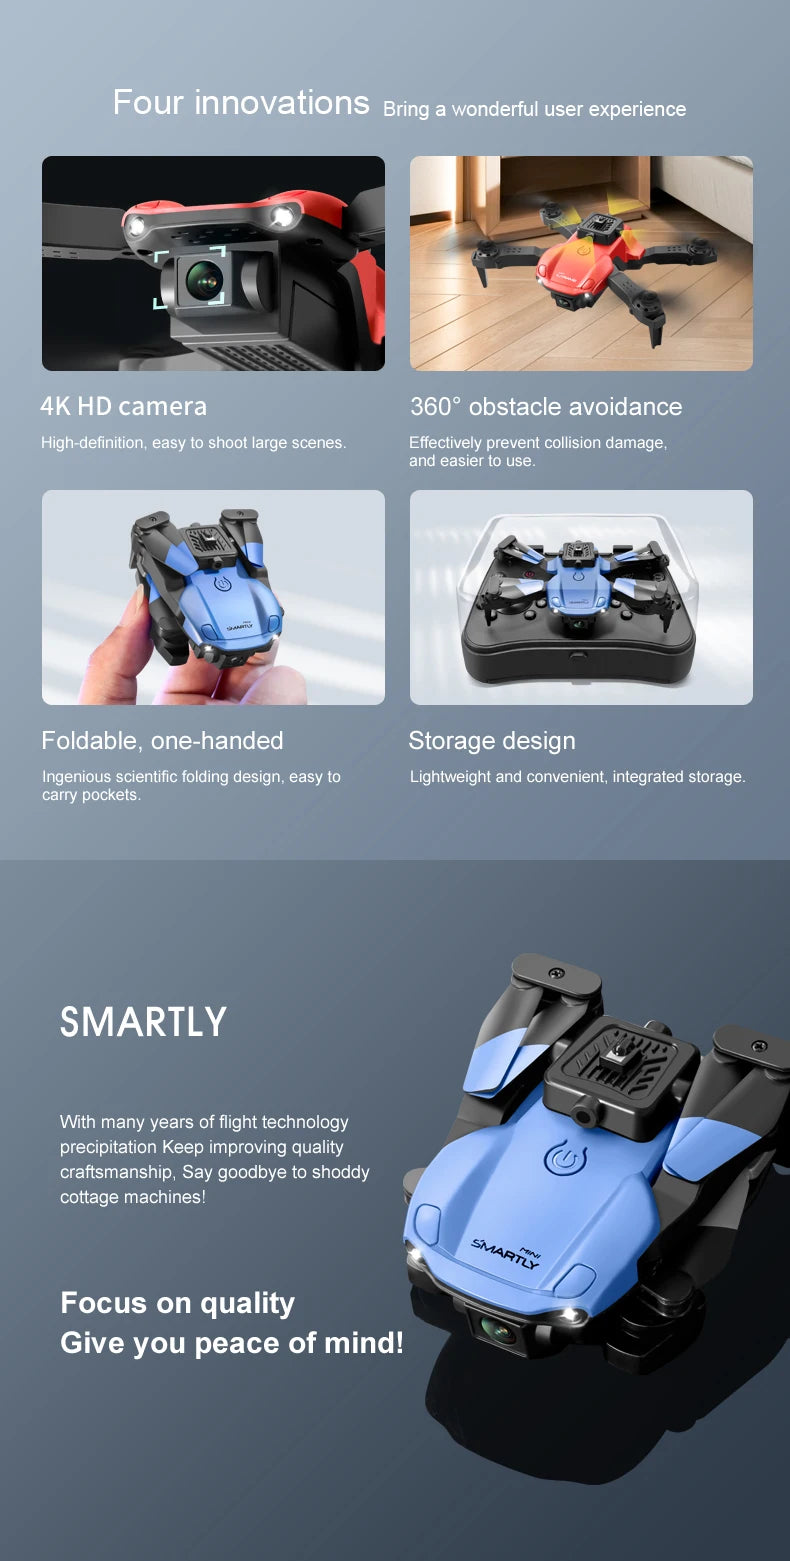 V26 Mini Drone, four innovations bring a wonderful user experience 4k hd camera